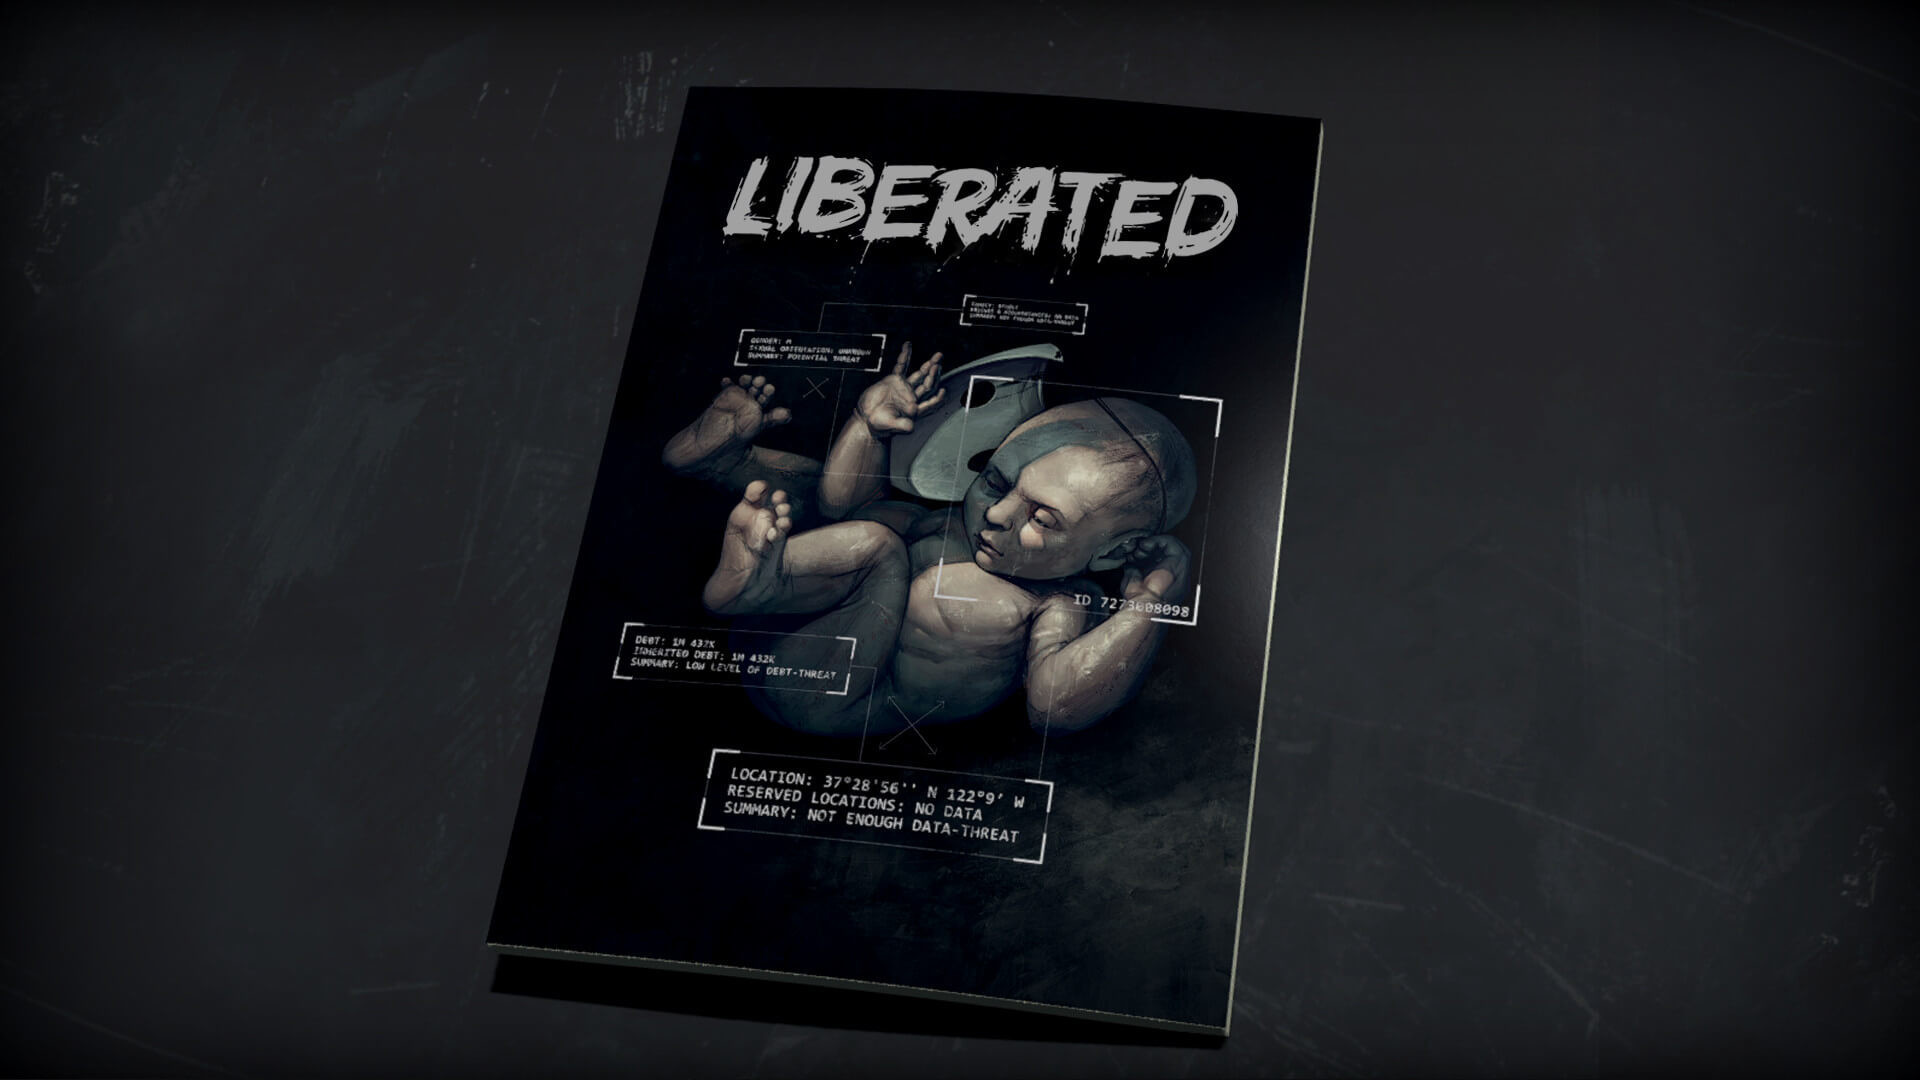 Liberated Demo Featured Screenshot #1